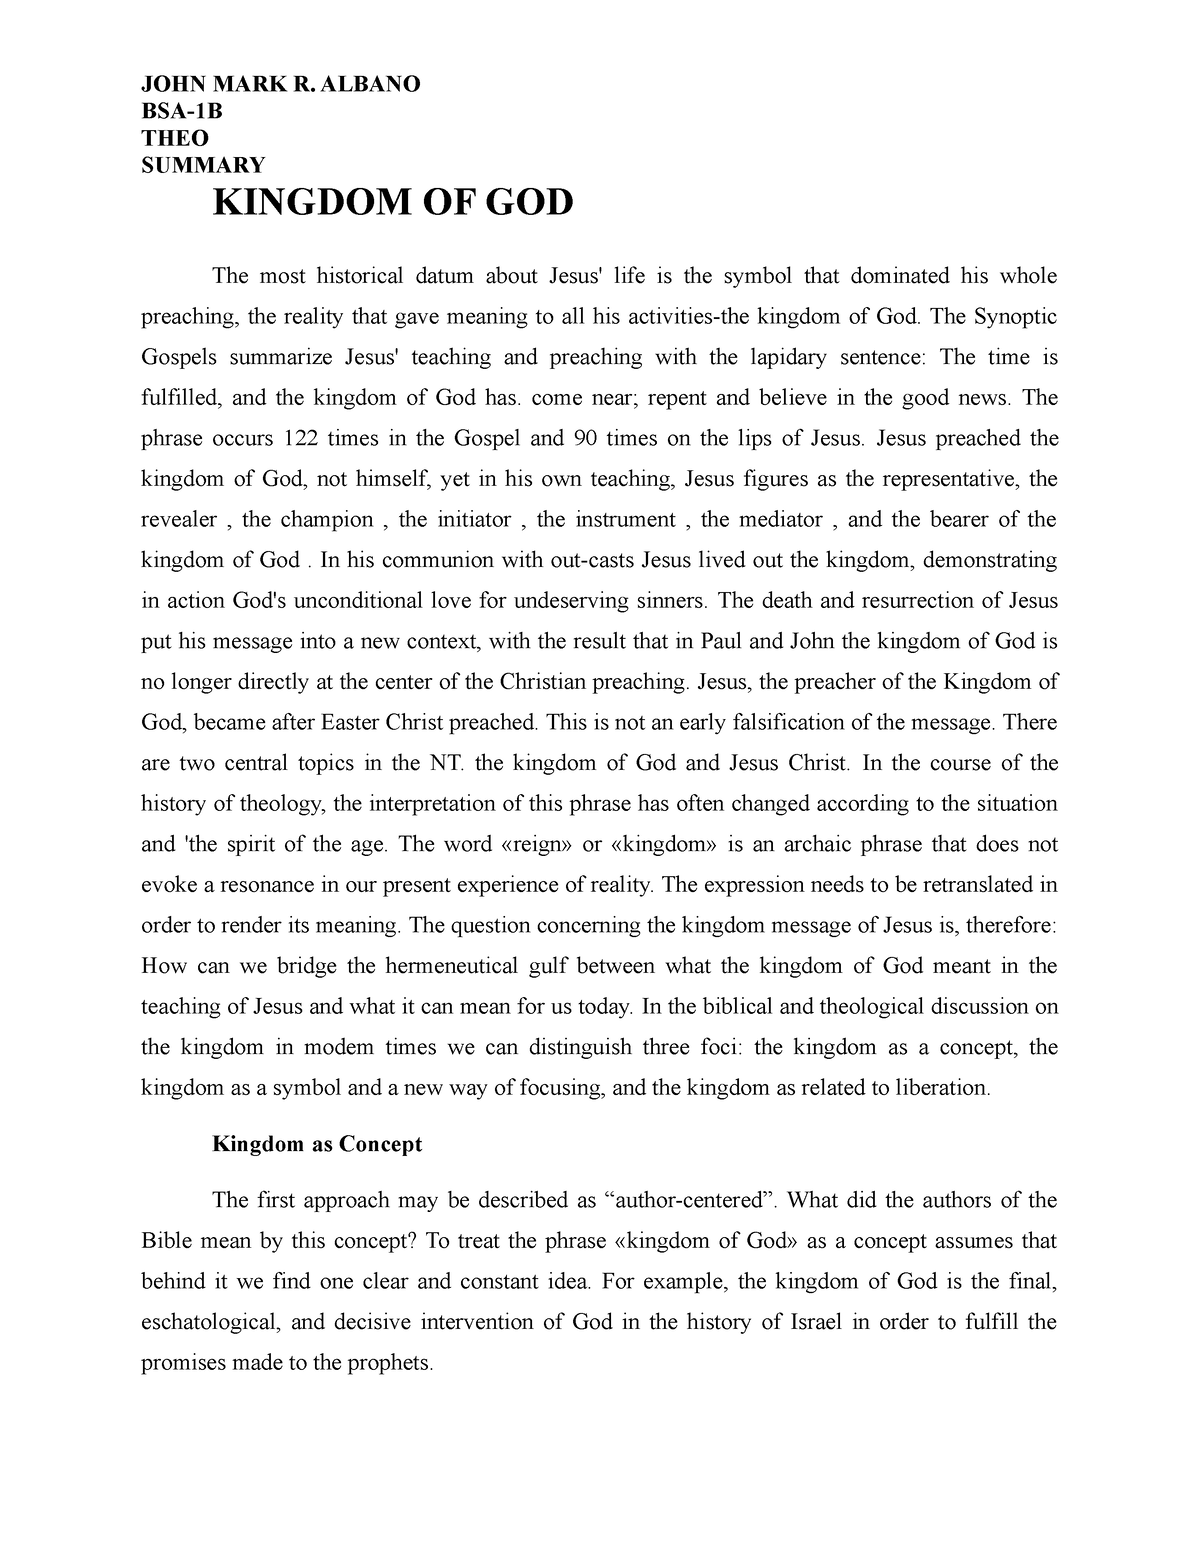 kingdom of god essay